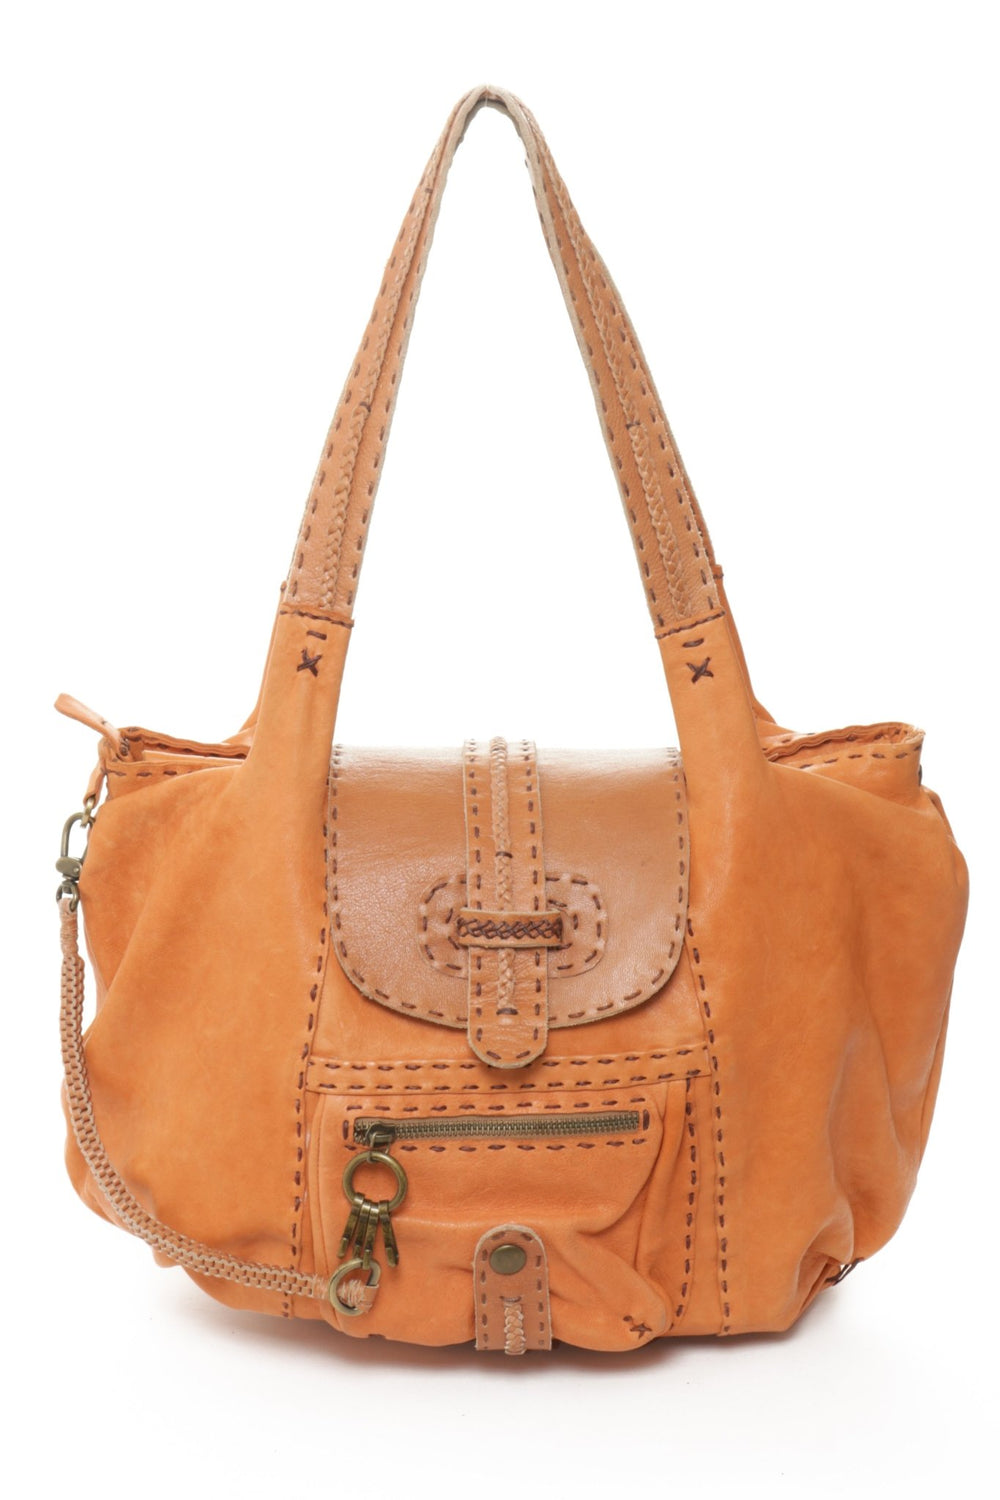 CM712 Orange - Carla Mancini Handbags